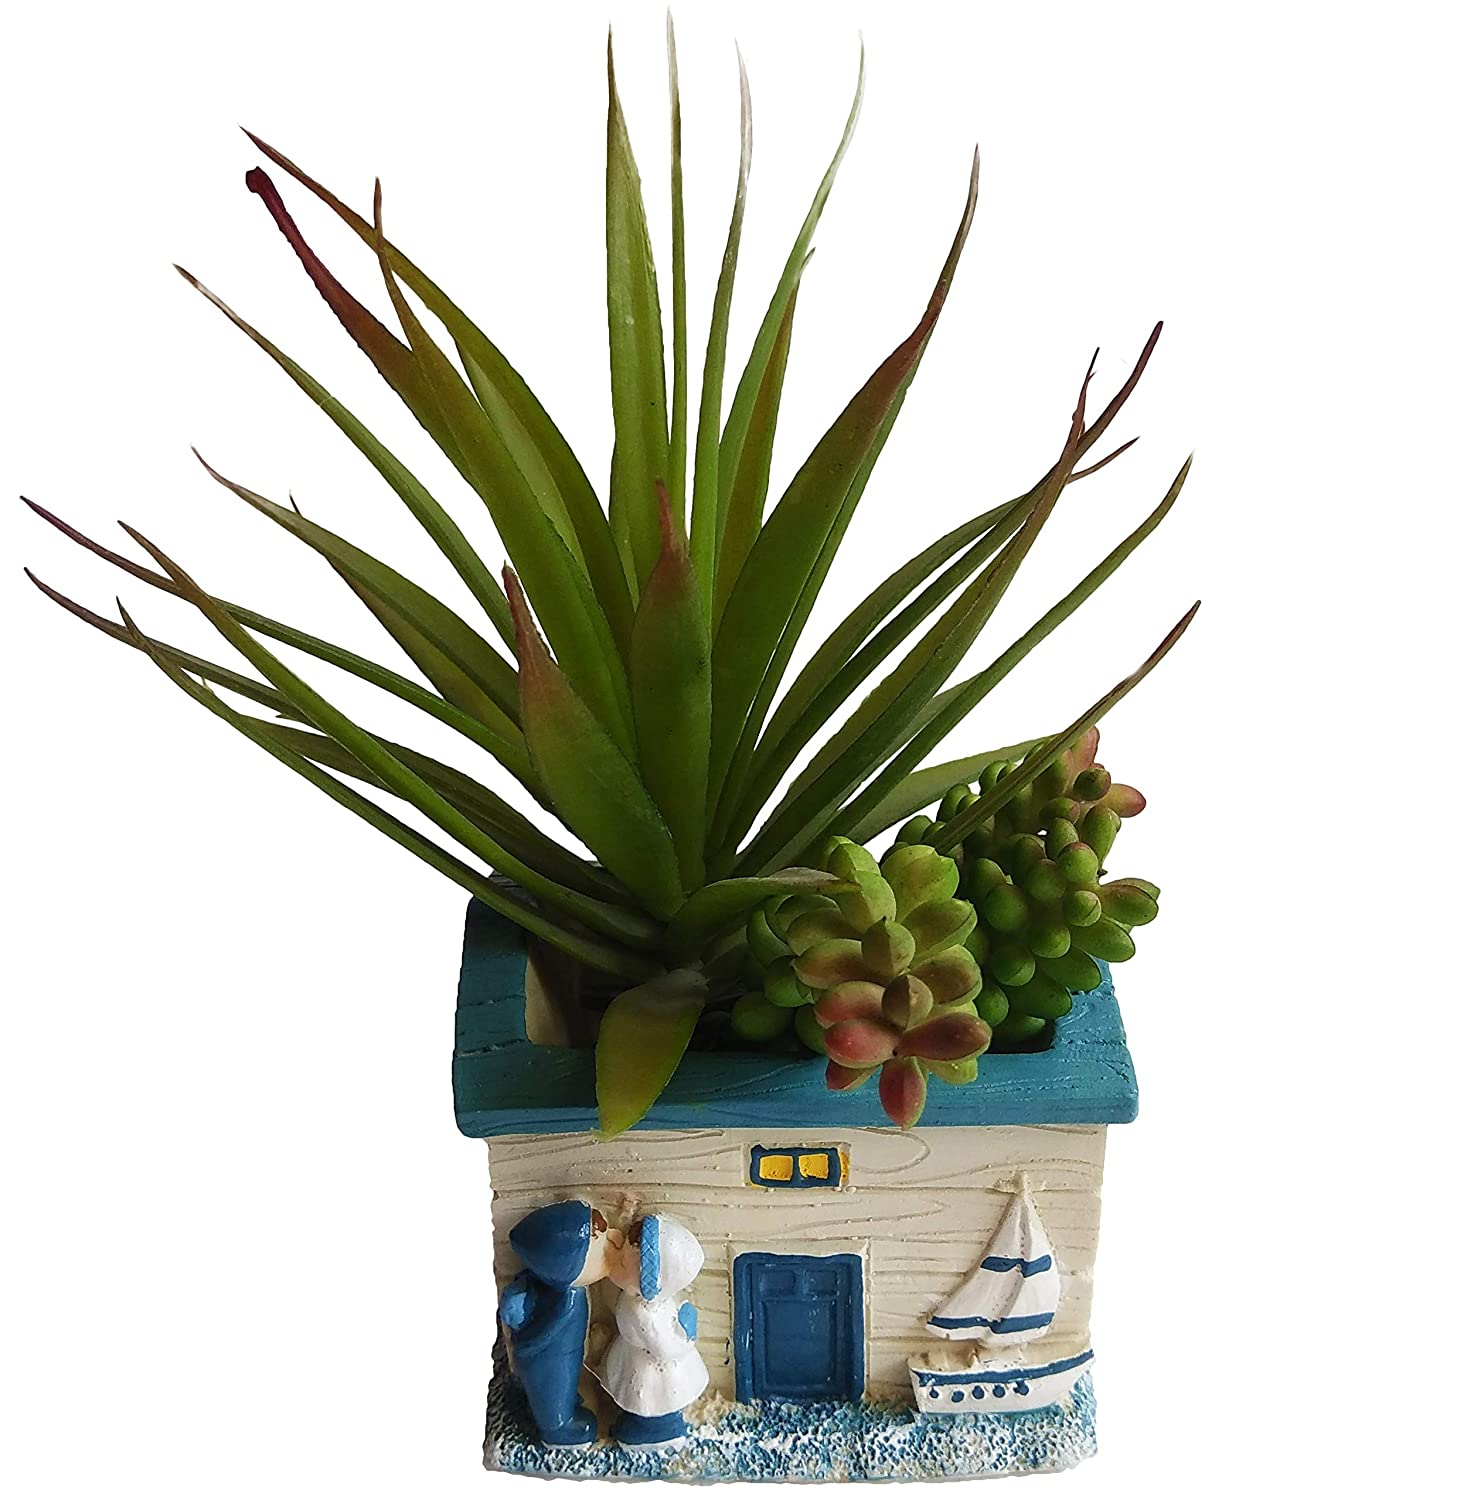 6 PCS Set Cute Flower Girls and Curly Hair Boys Shaped Succulent Cactus Flower Pot/Plant Pots/Planter/Container for Home Garden Office Desktop Decoration Plants Not Included 